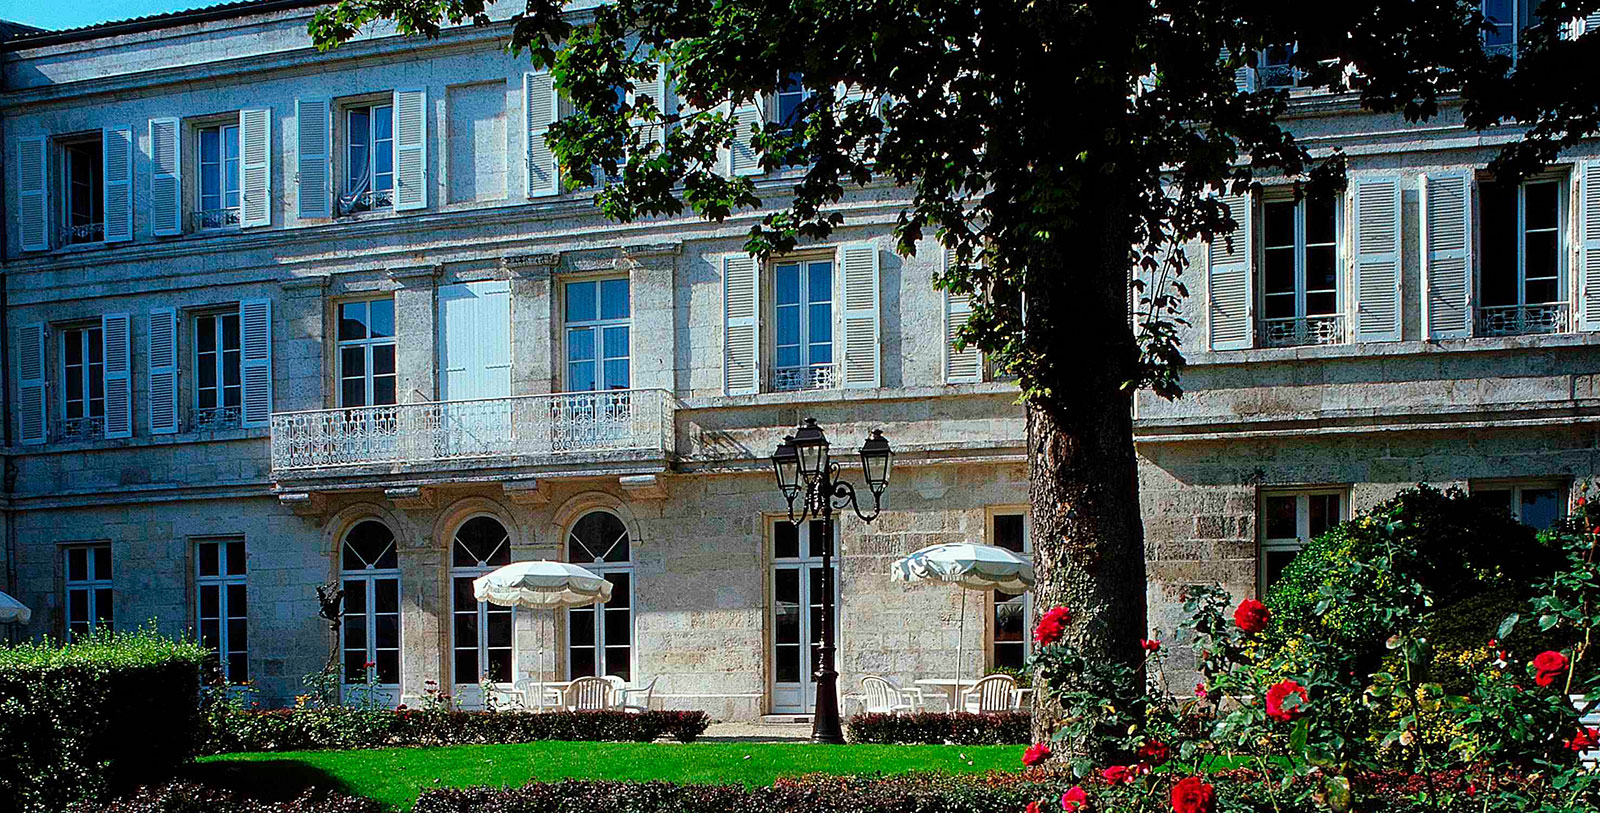 Image of Hotel Exterior, Mercure Angouleme Hotel de France, established 1600, member of Historic Hotels Worldwide 2019, France, Europe, Overview Video